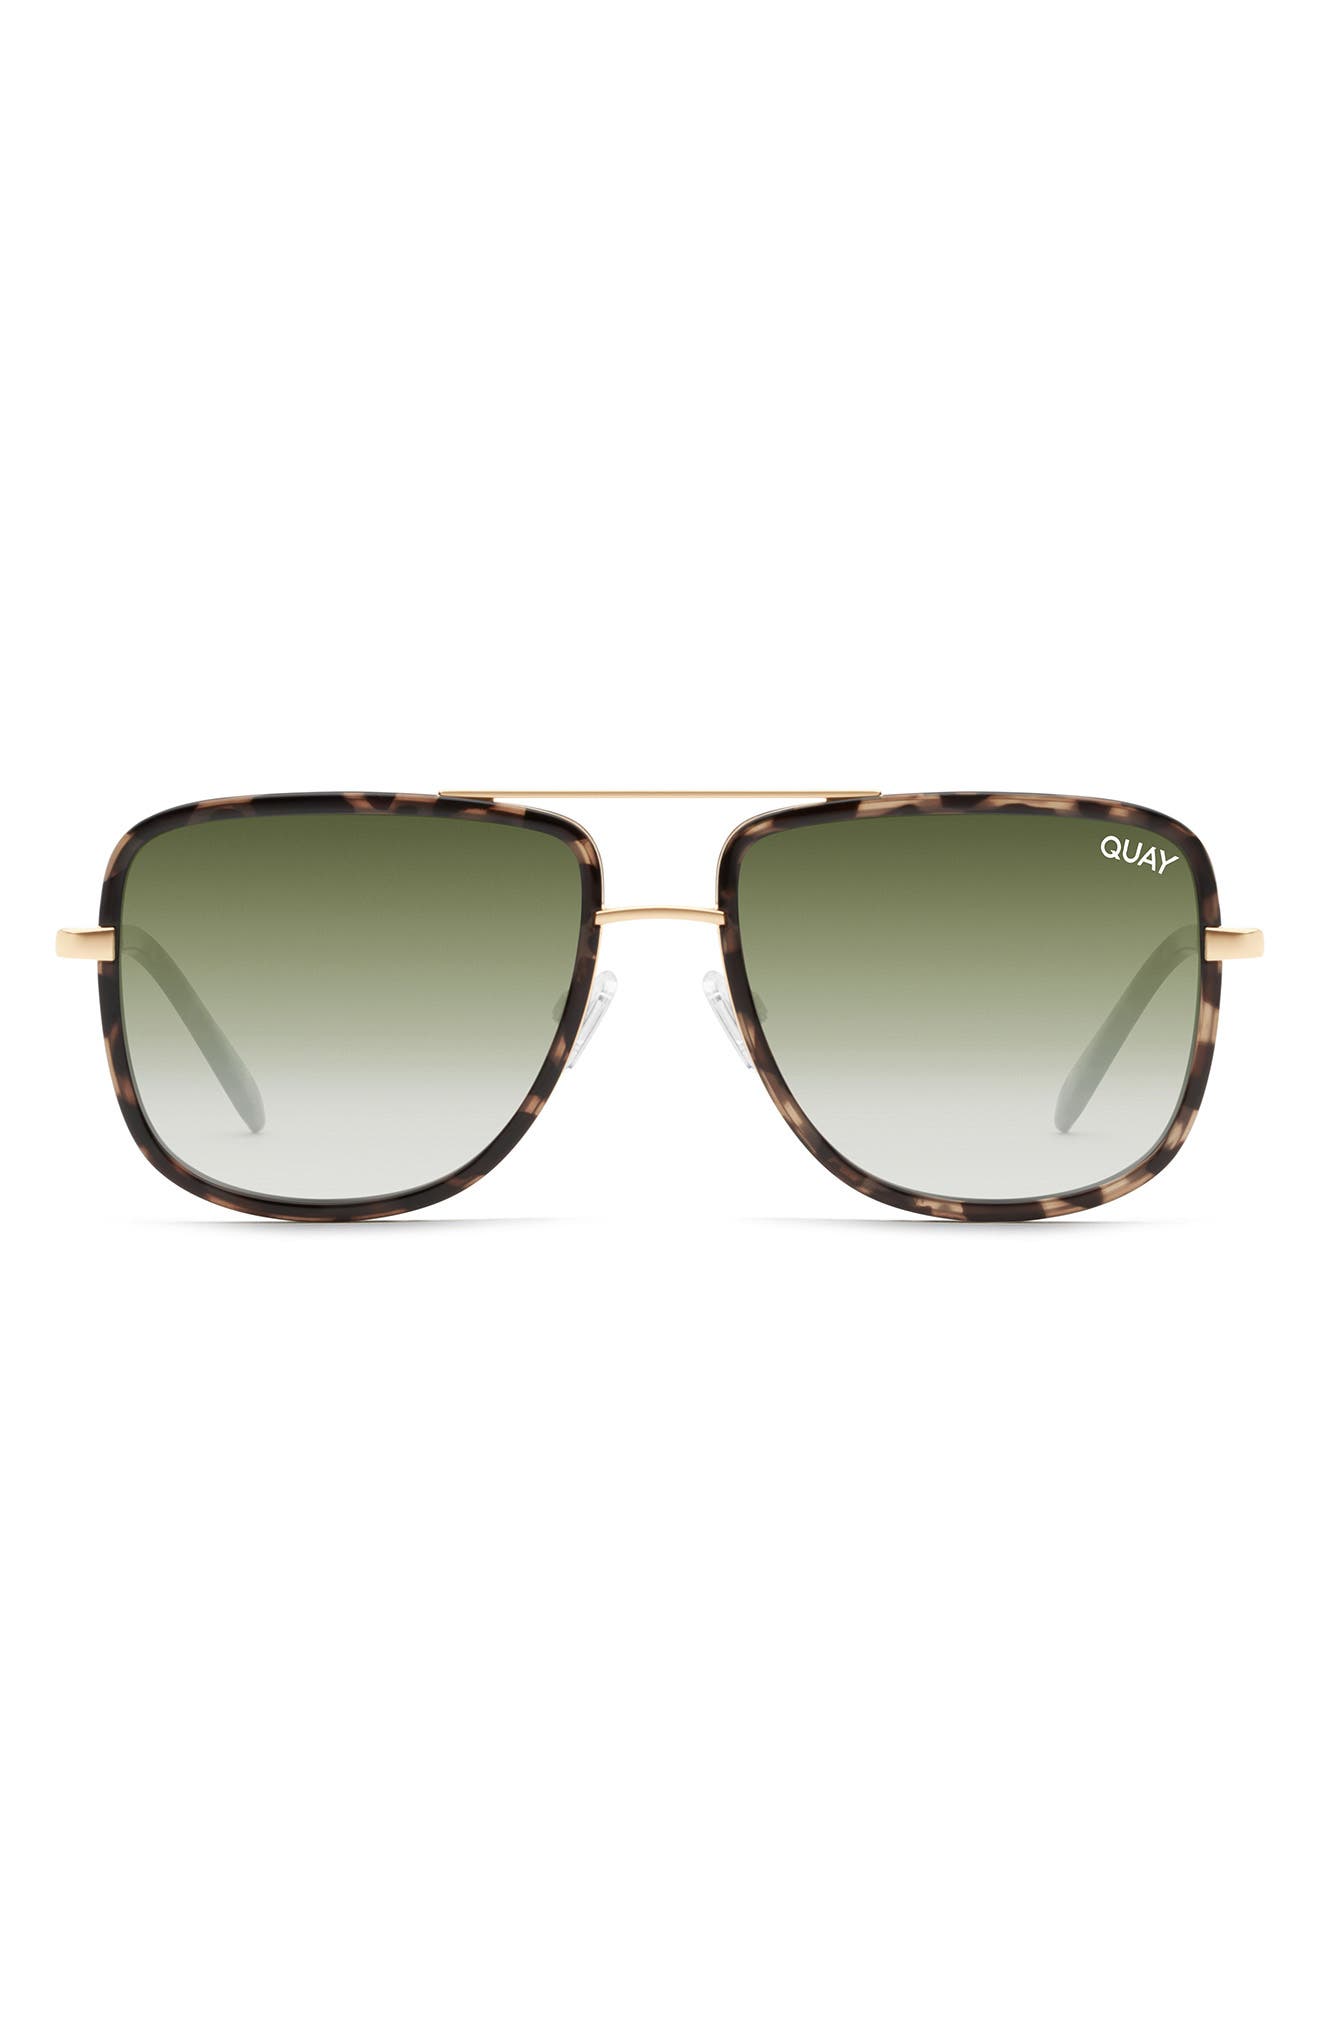 Gazelle Rectangle Aviator Gold Metal Bar Men Women Designer Fashion Sunglasses 